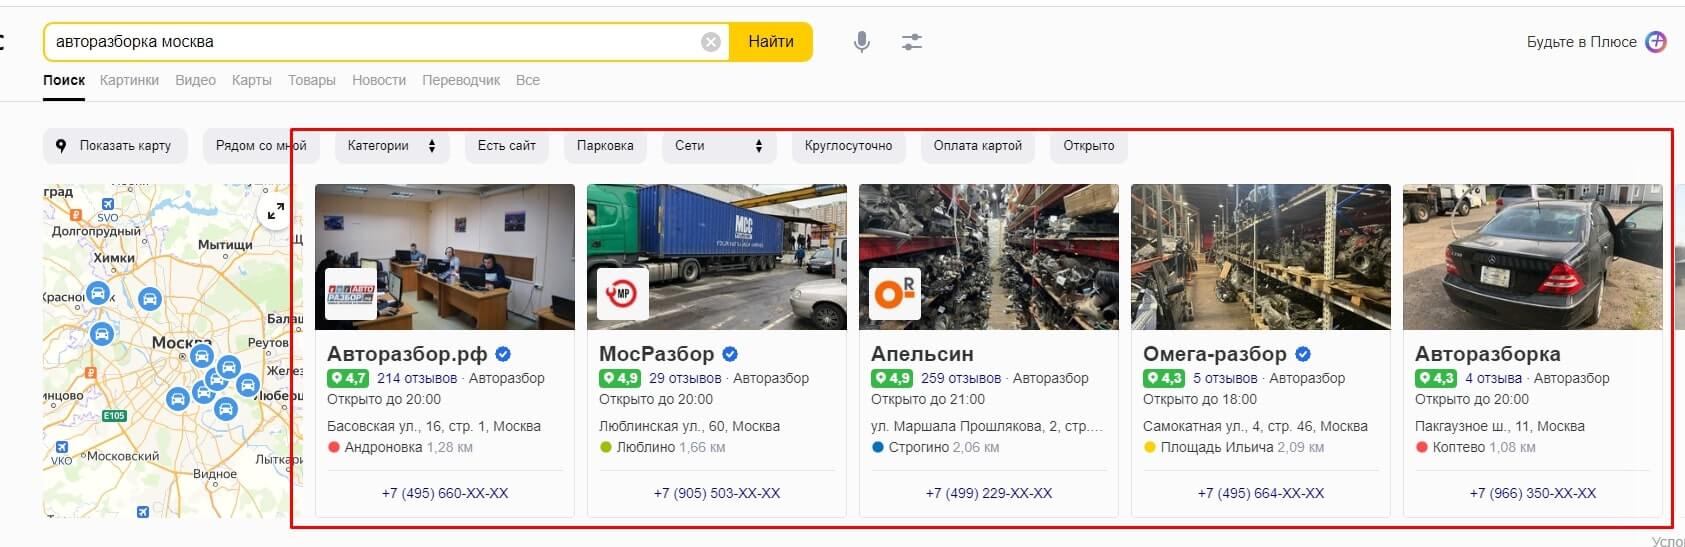 подписка в Яндекс.Бизнес